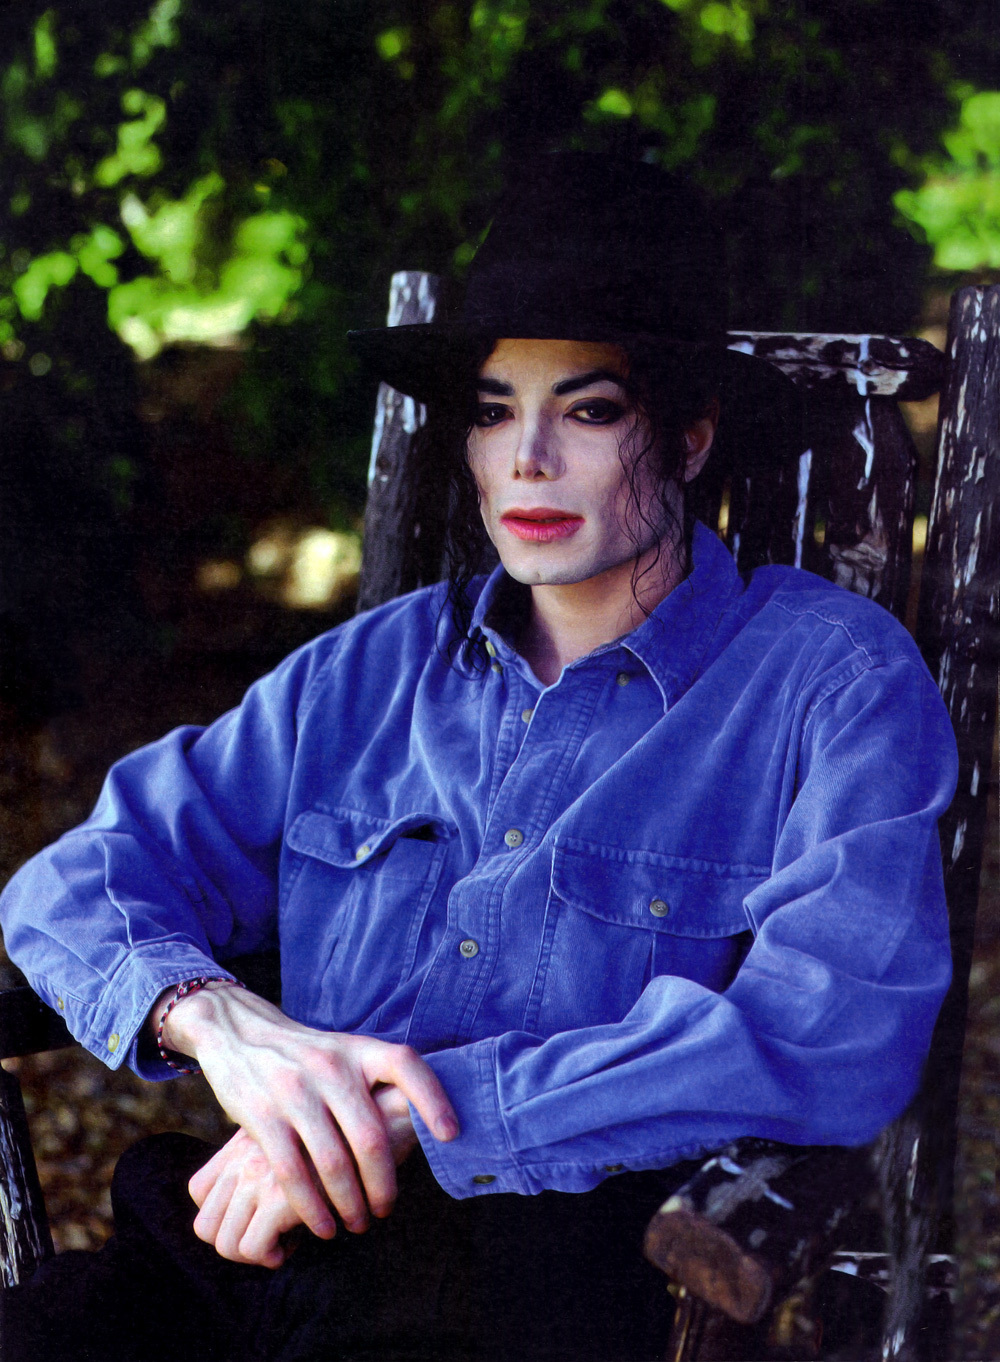 Michael-Jackson-is-the-King-of-POP-michael-jackson-23196801-1000-1362.jpg